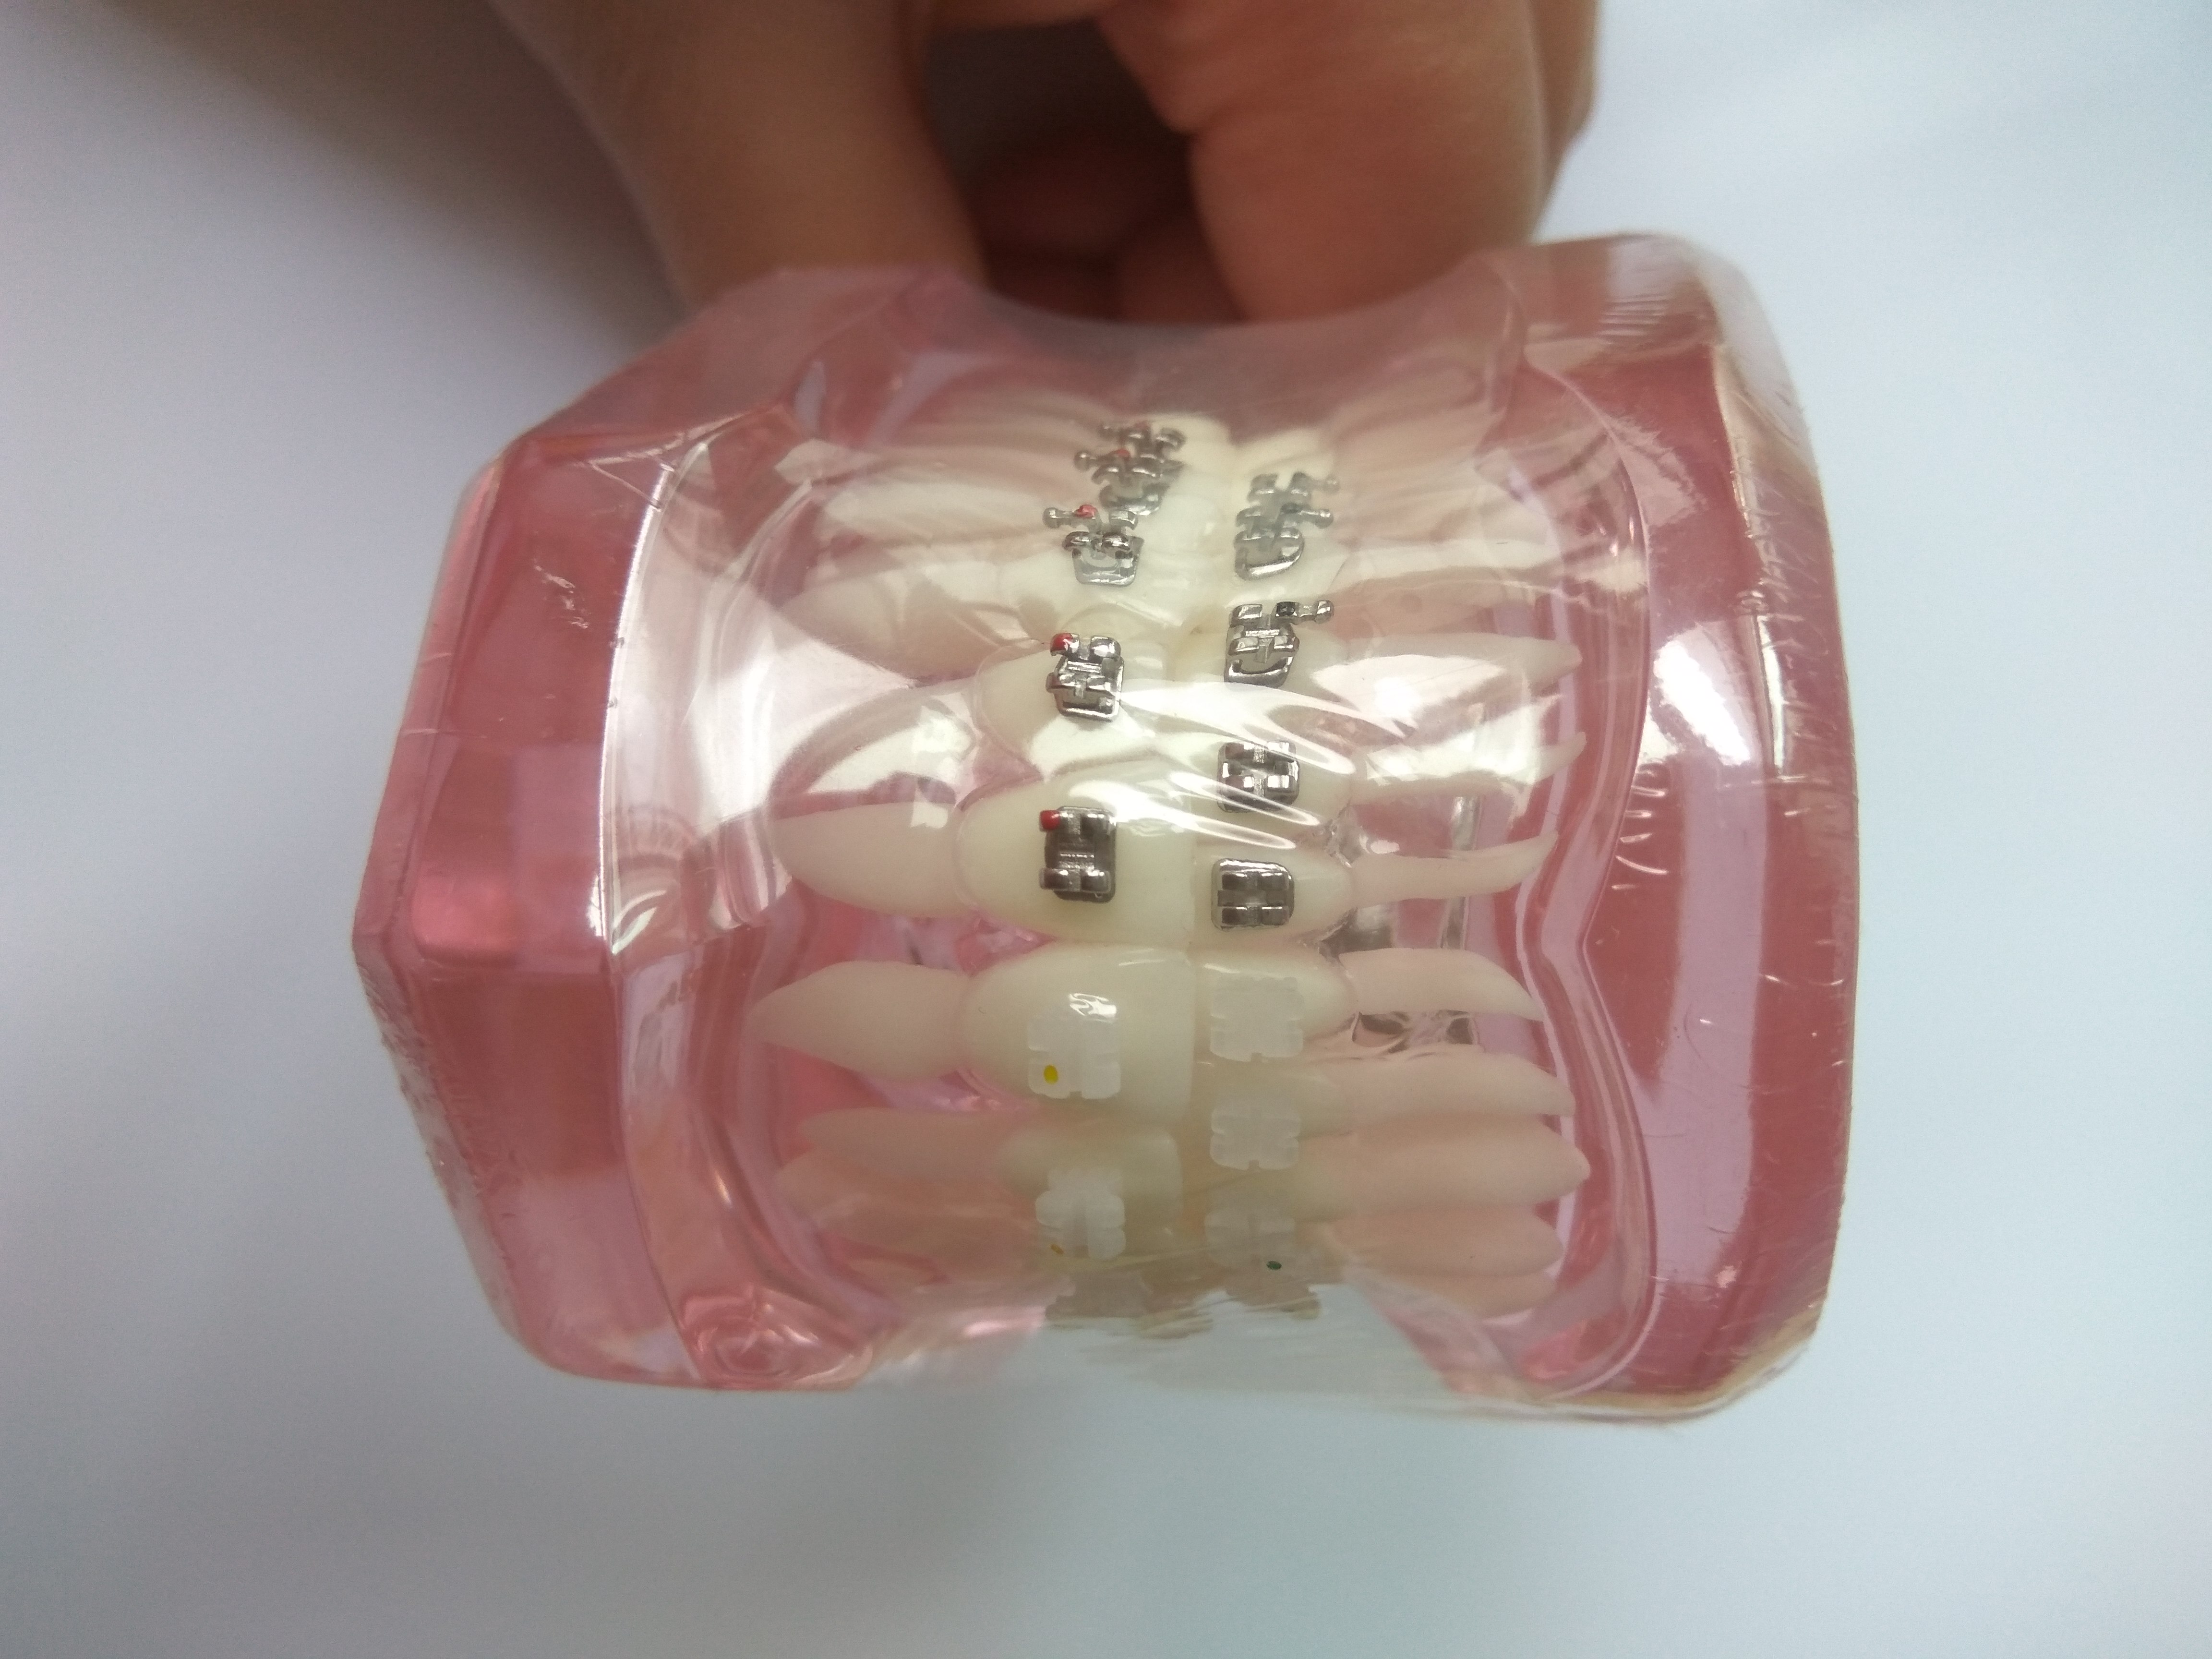 dental all metal brackets transparent orthodontic dental model for studying dental model practice wires and ligature ties